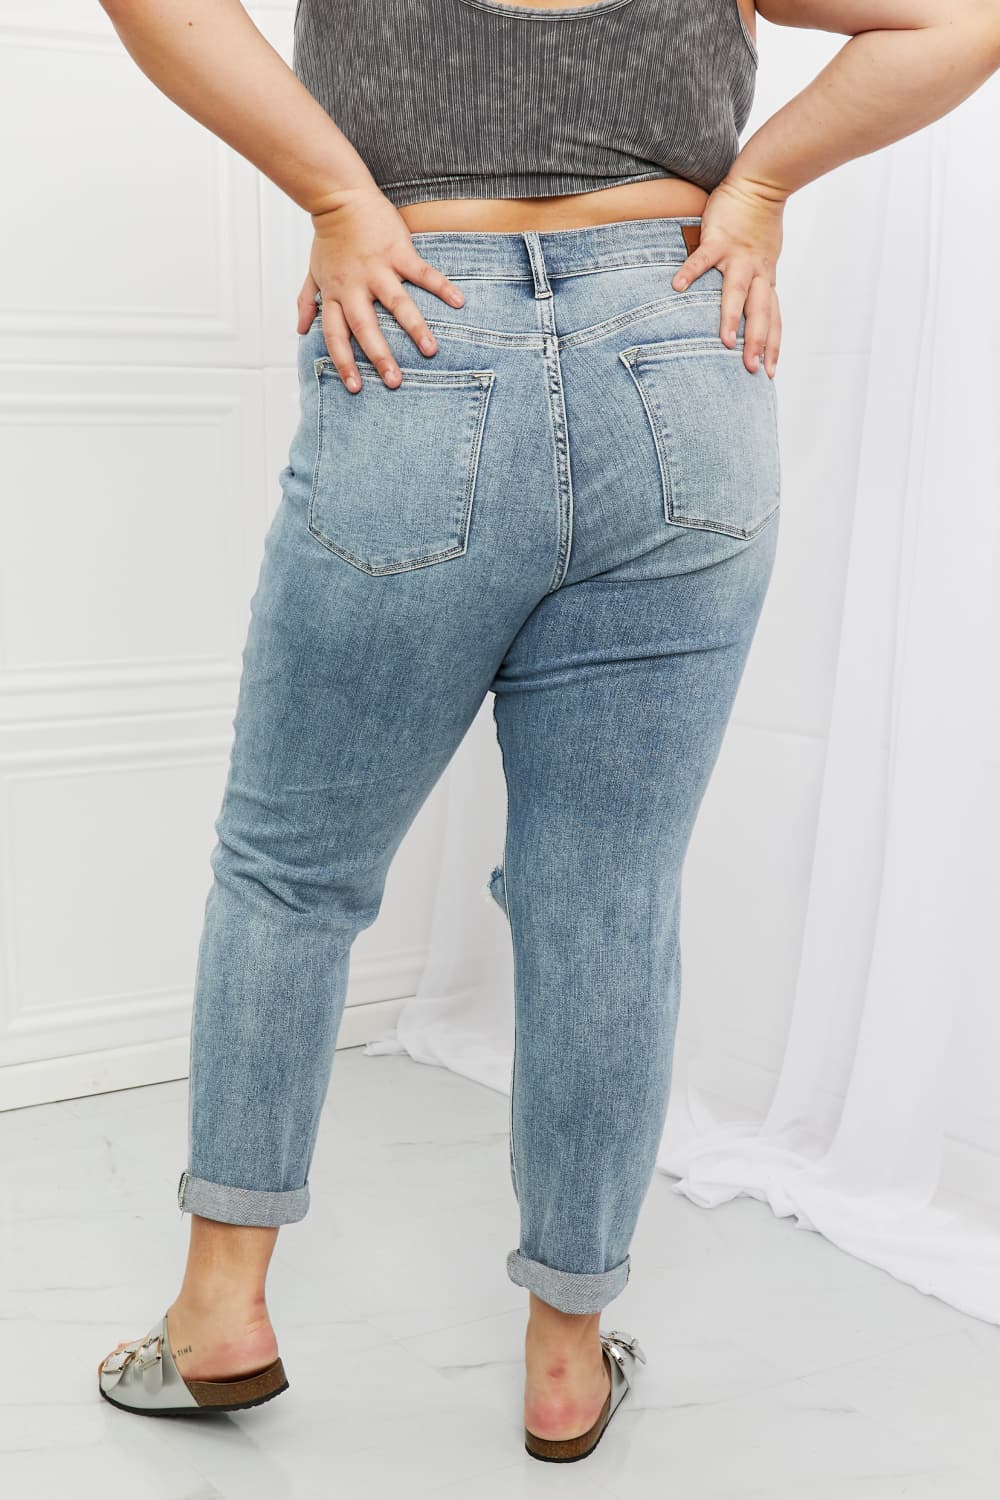 Judy Blue Mid Rise Boyfriend Jeans* - AnnRose Boutique